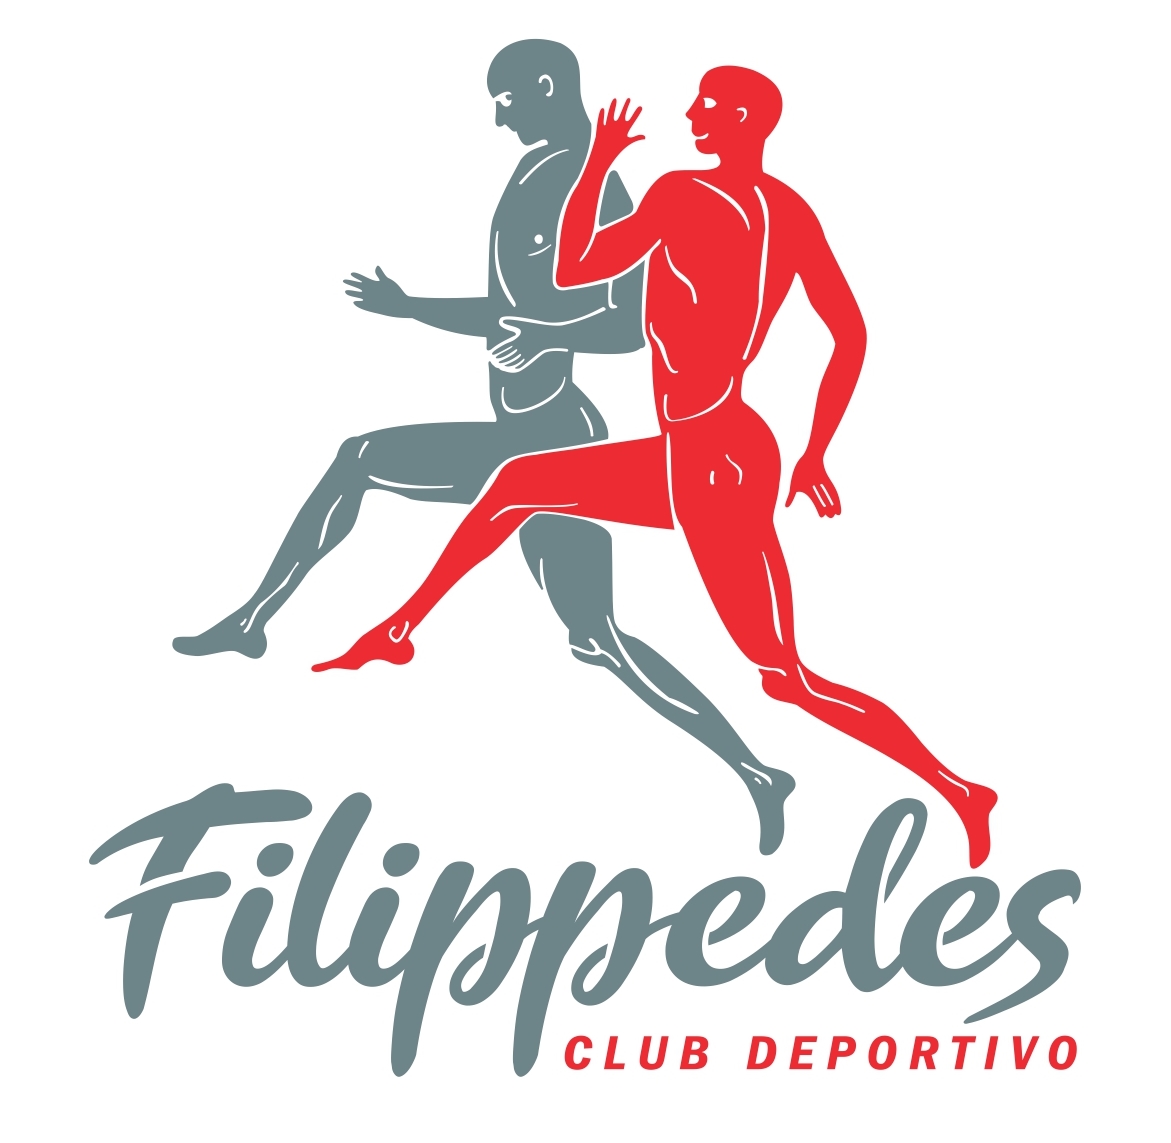 Filippedes logo NUEVO 2018_page-0001